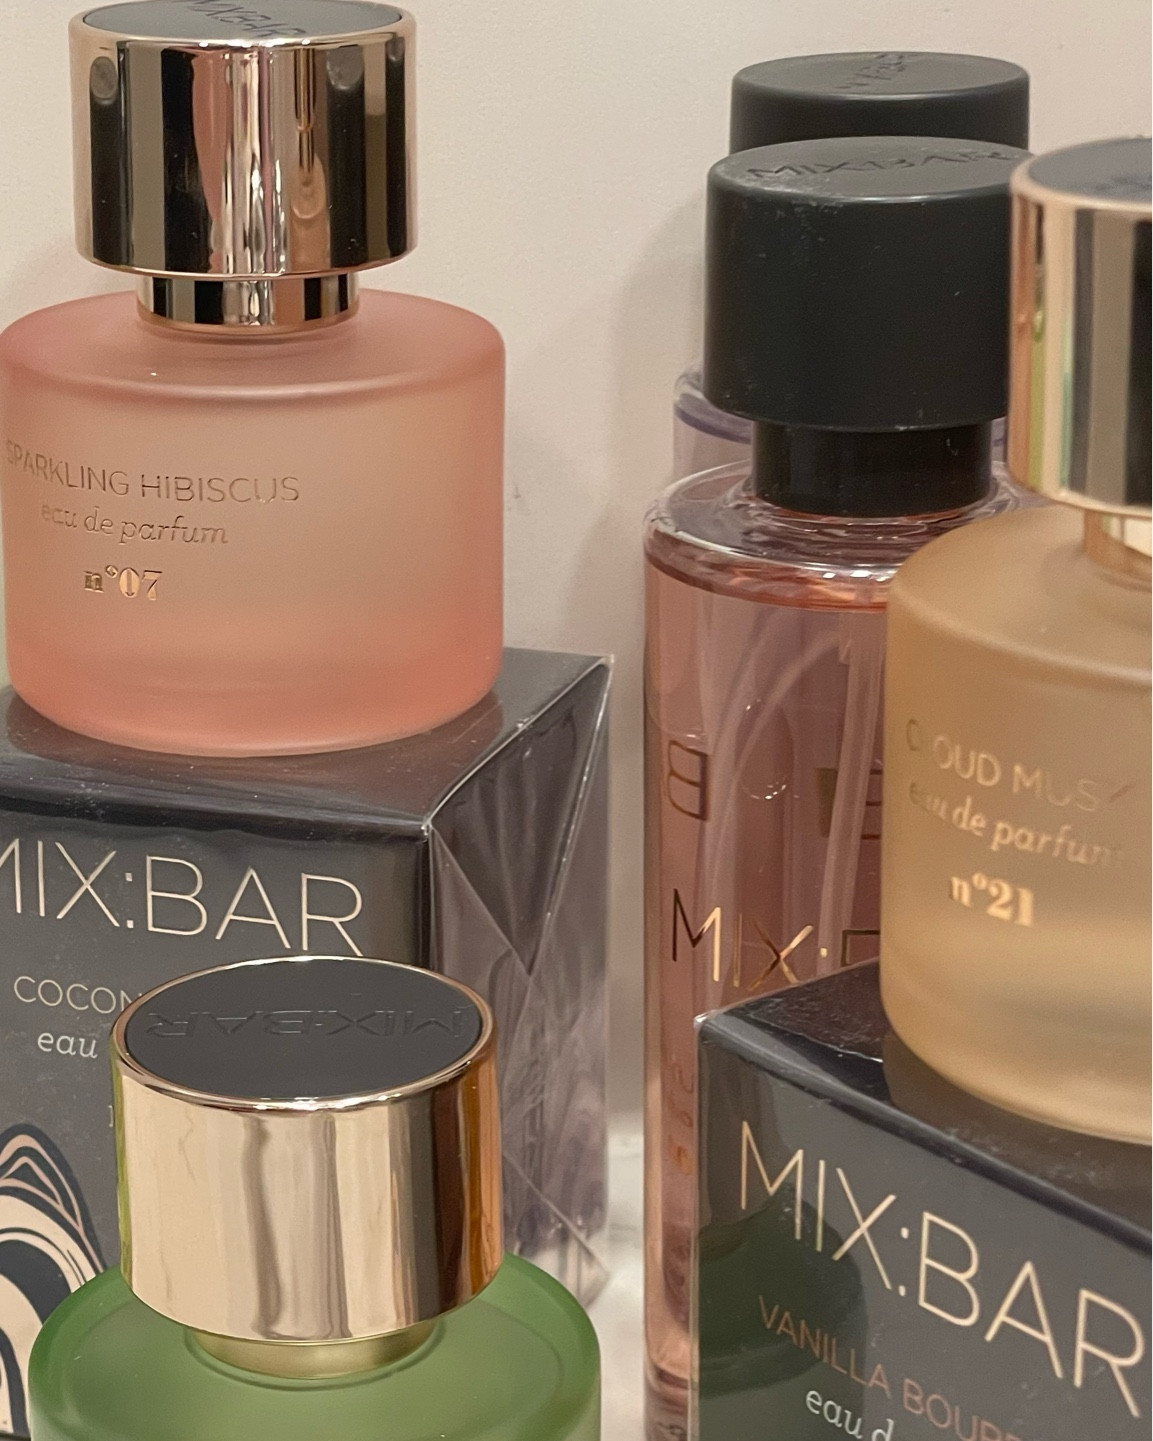 Mix:bar Vanilla Bourbon Hair & Body Mist - Clean, Vegan Body Spray Fragrance  & Hair Perfume For Women - 5 Fl Oz : Target